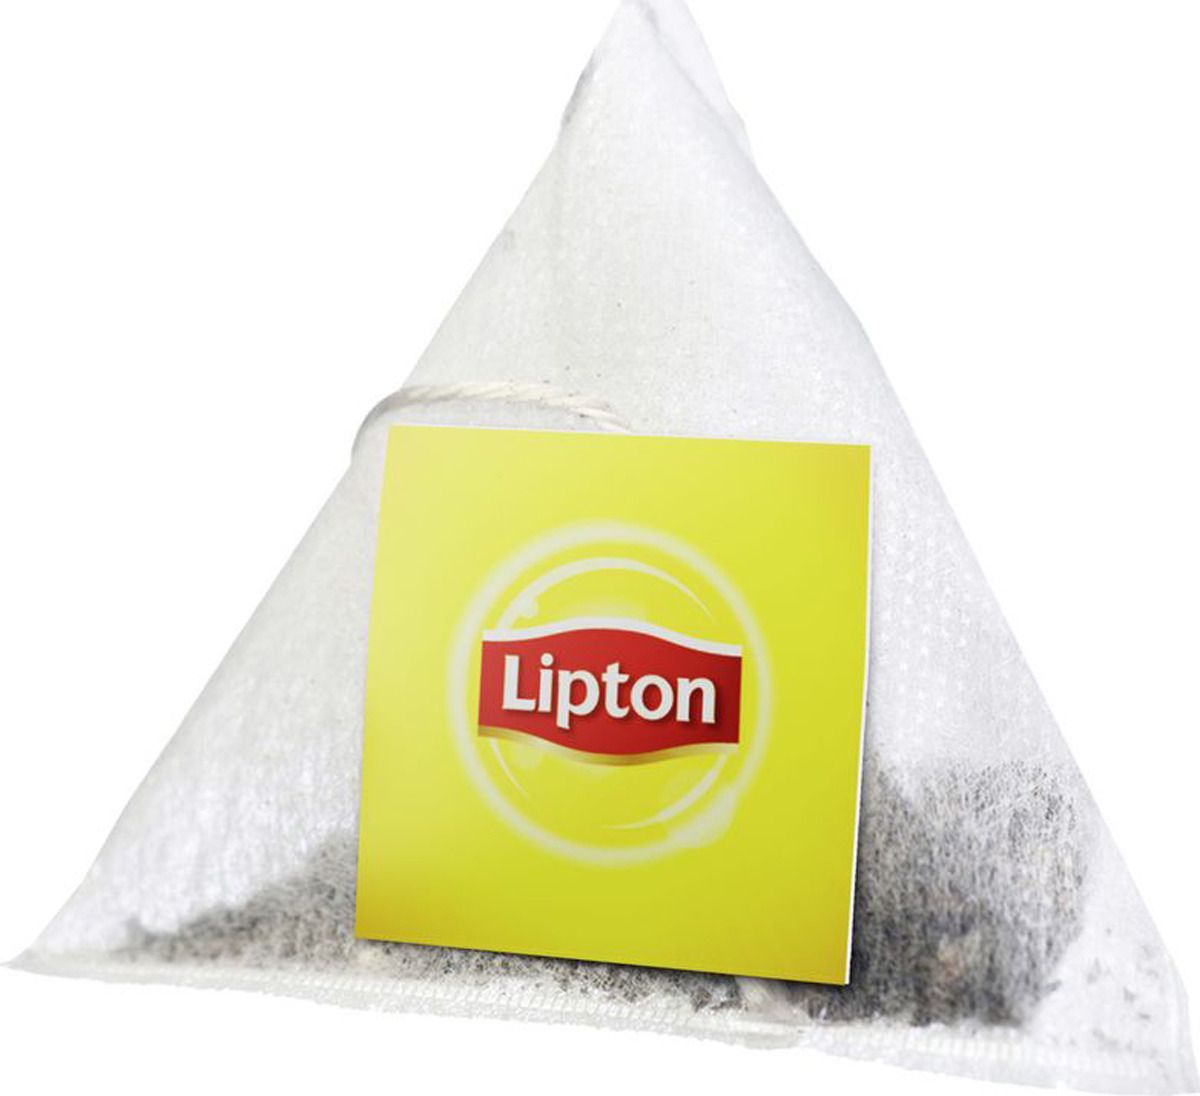    Lipton  c ,     , 20 